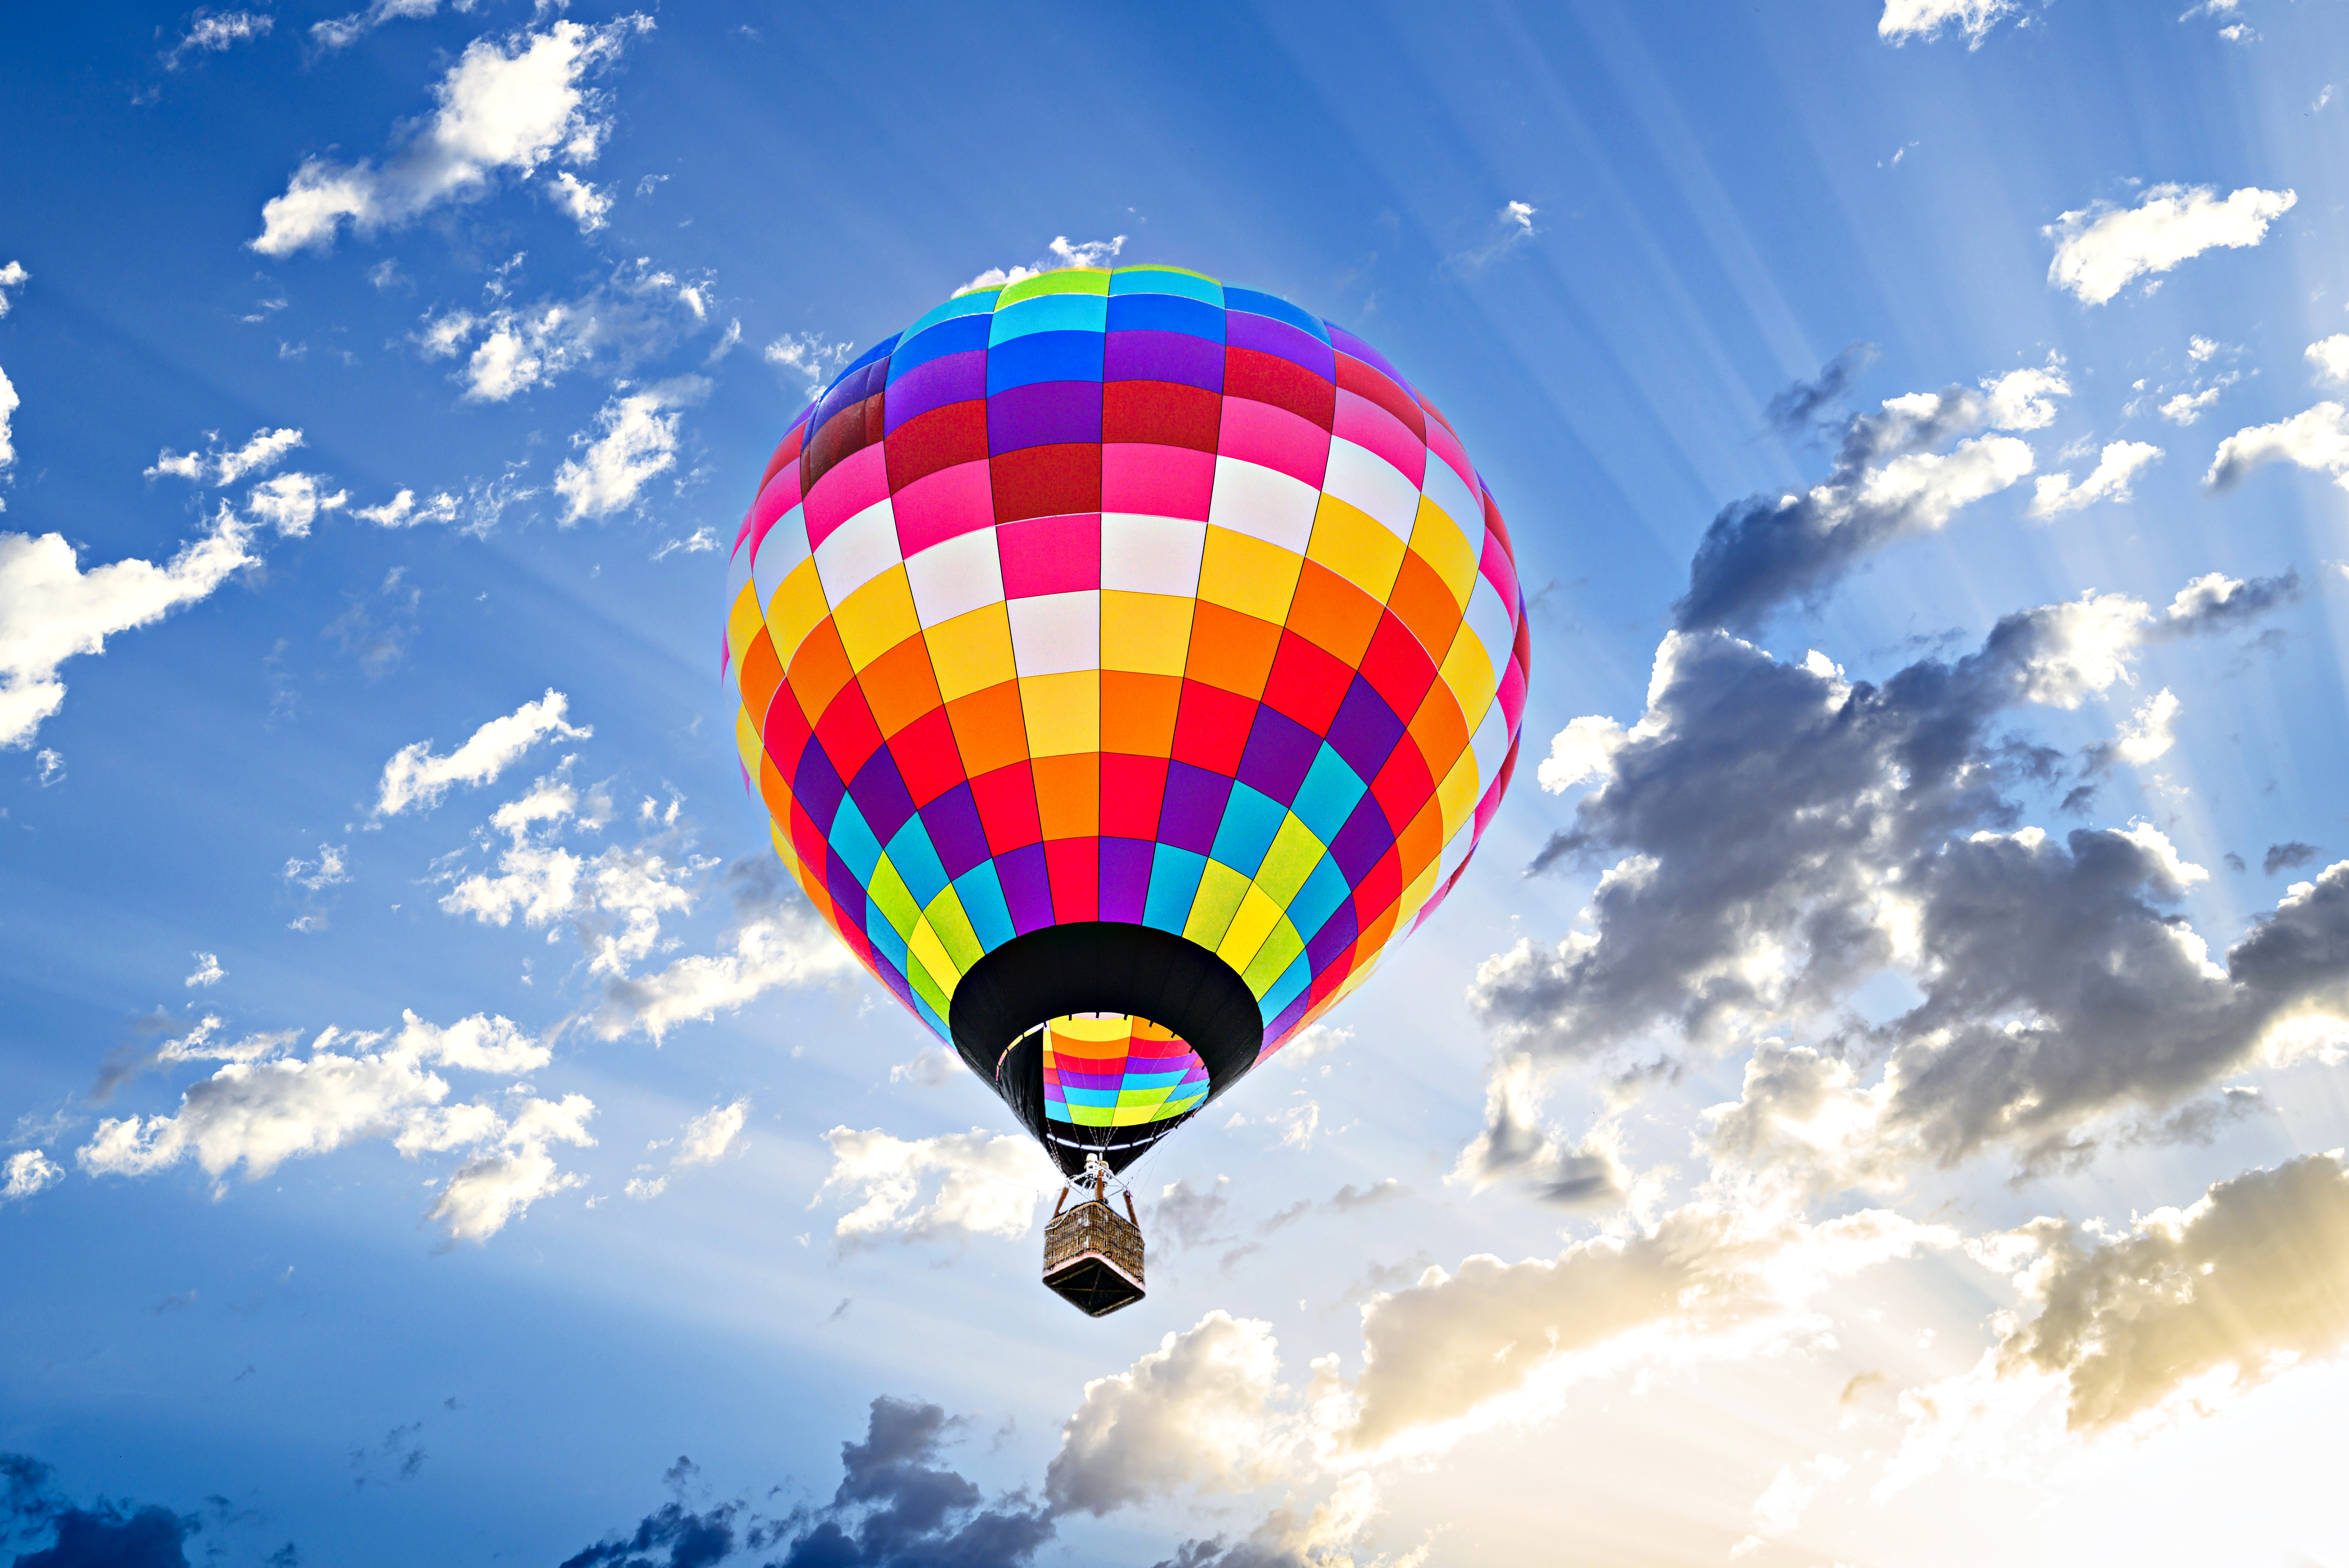 Hot air balloon crash kills 4, critically injures 1 in Arizona